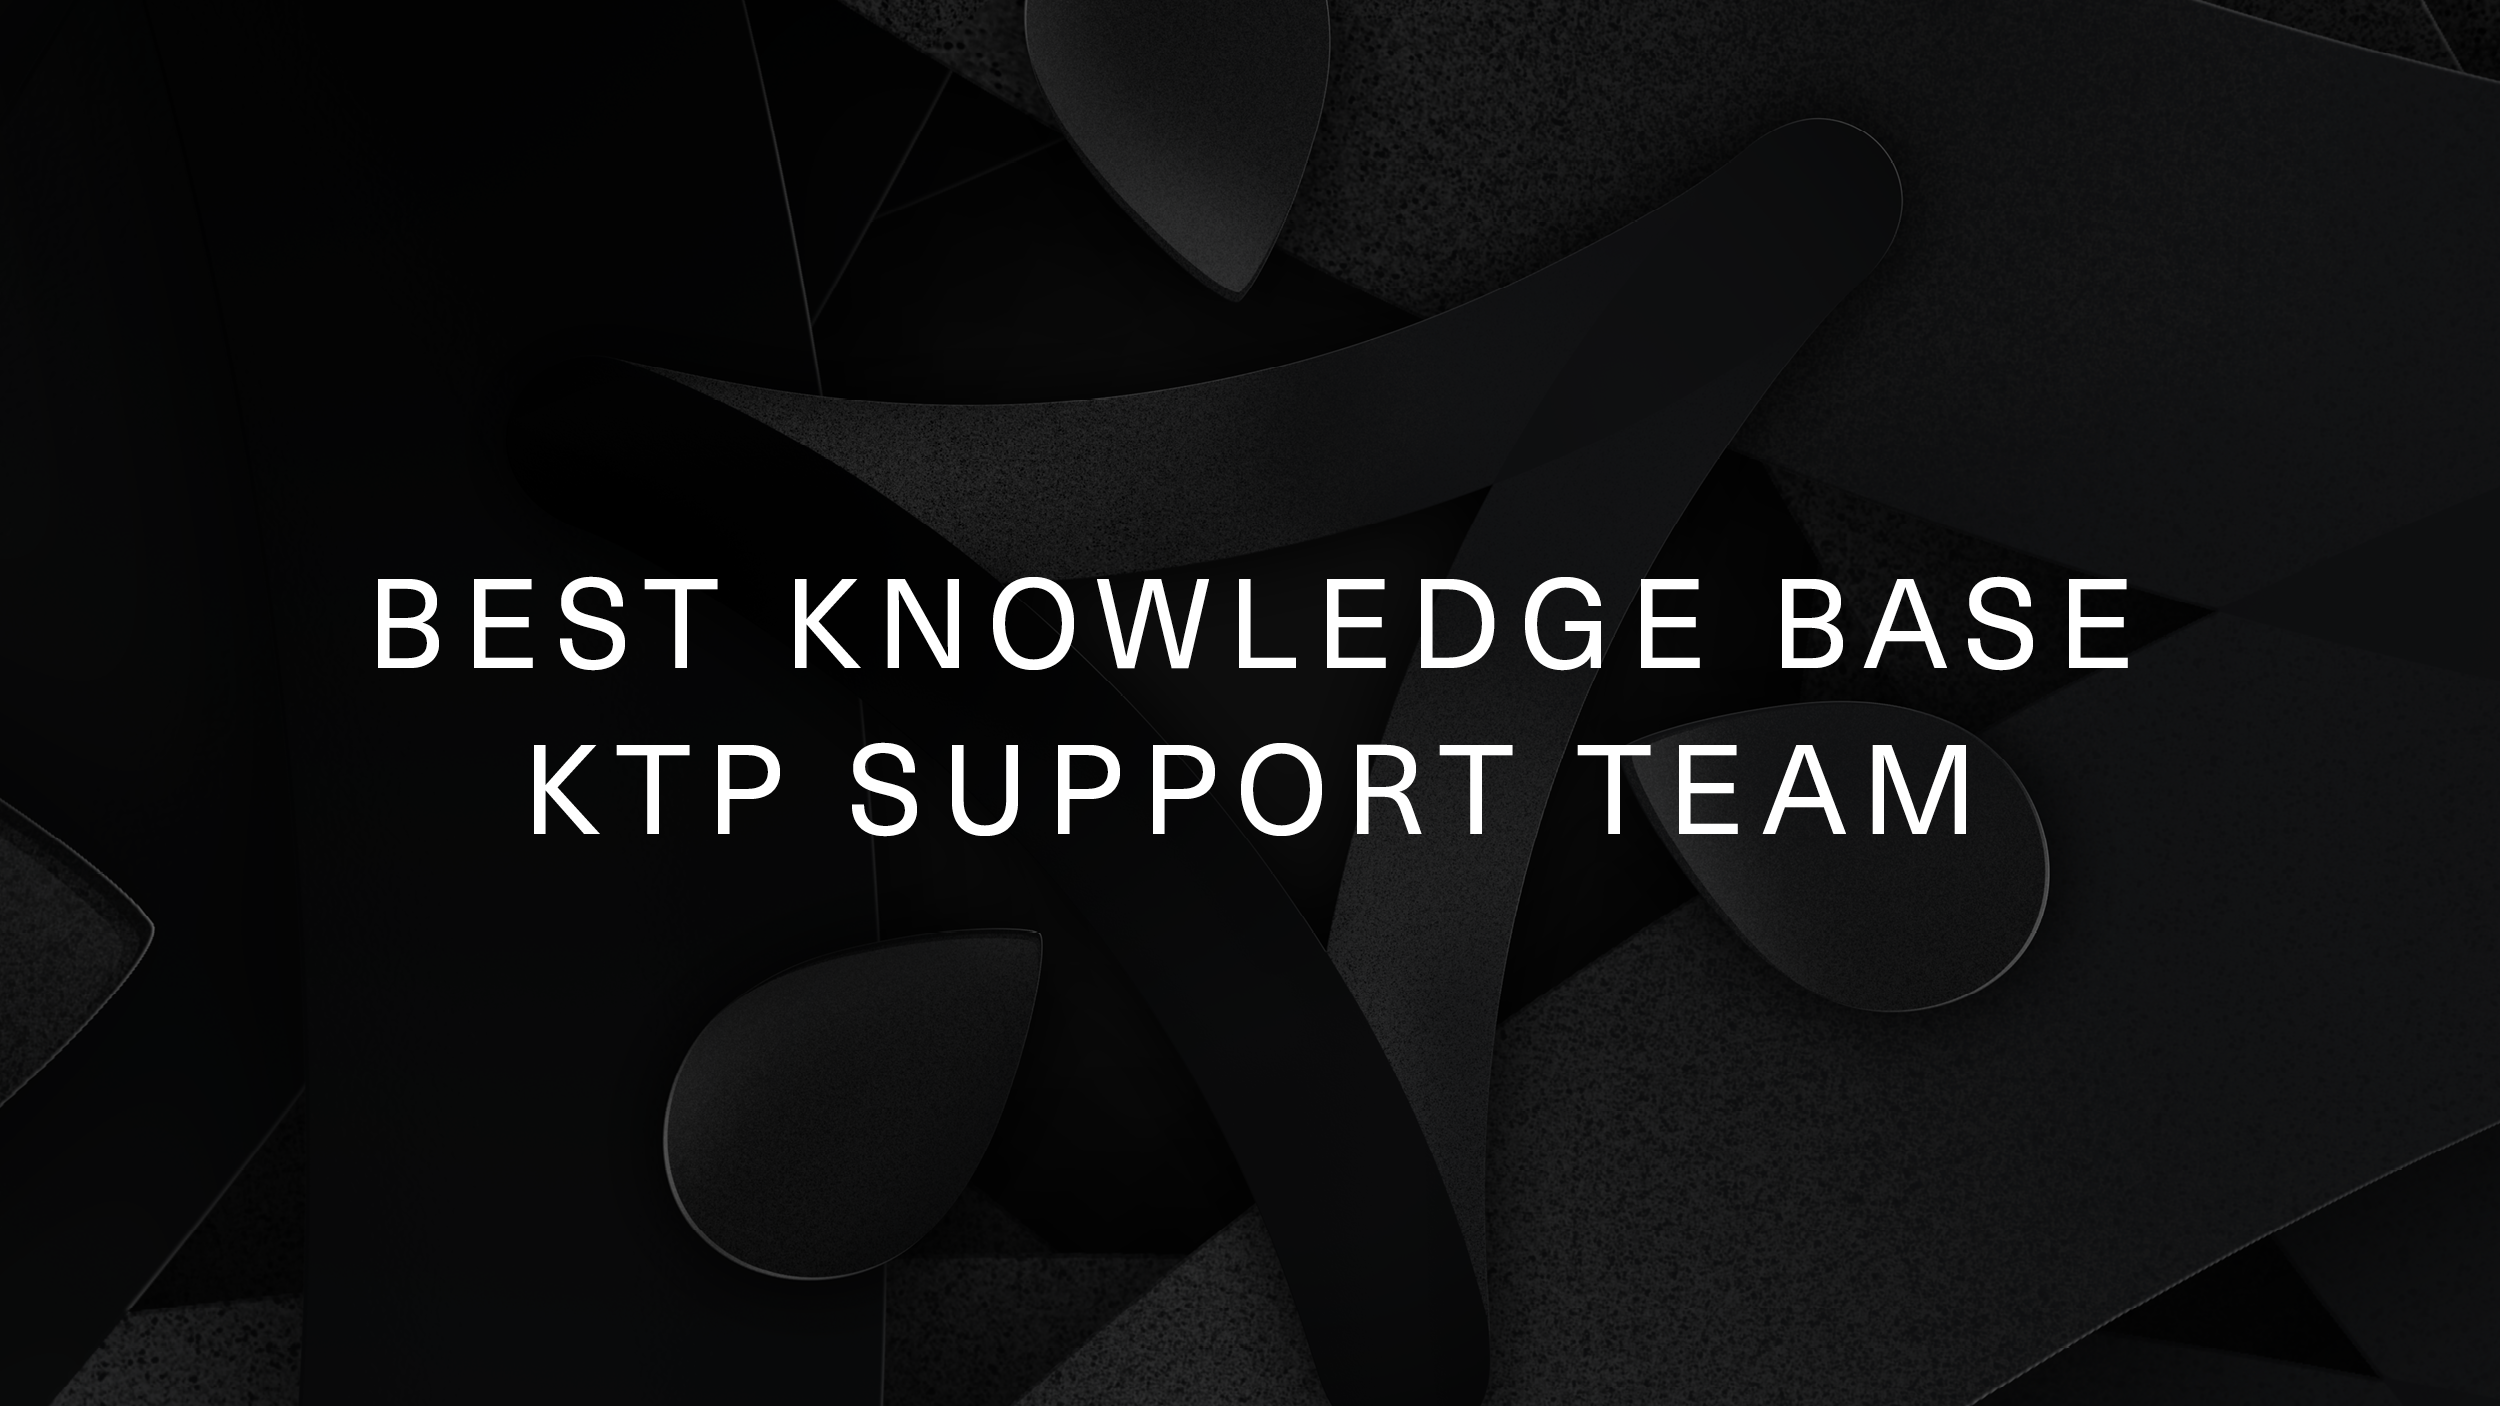 Best Knowledge Base KTP Support Team Award 